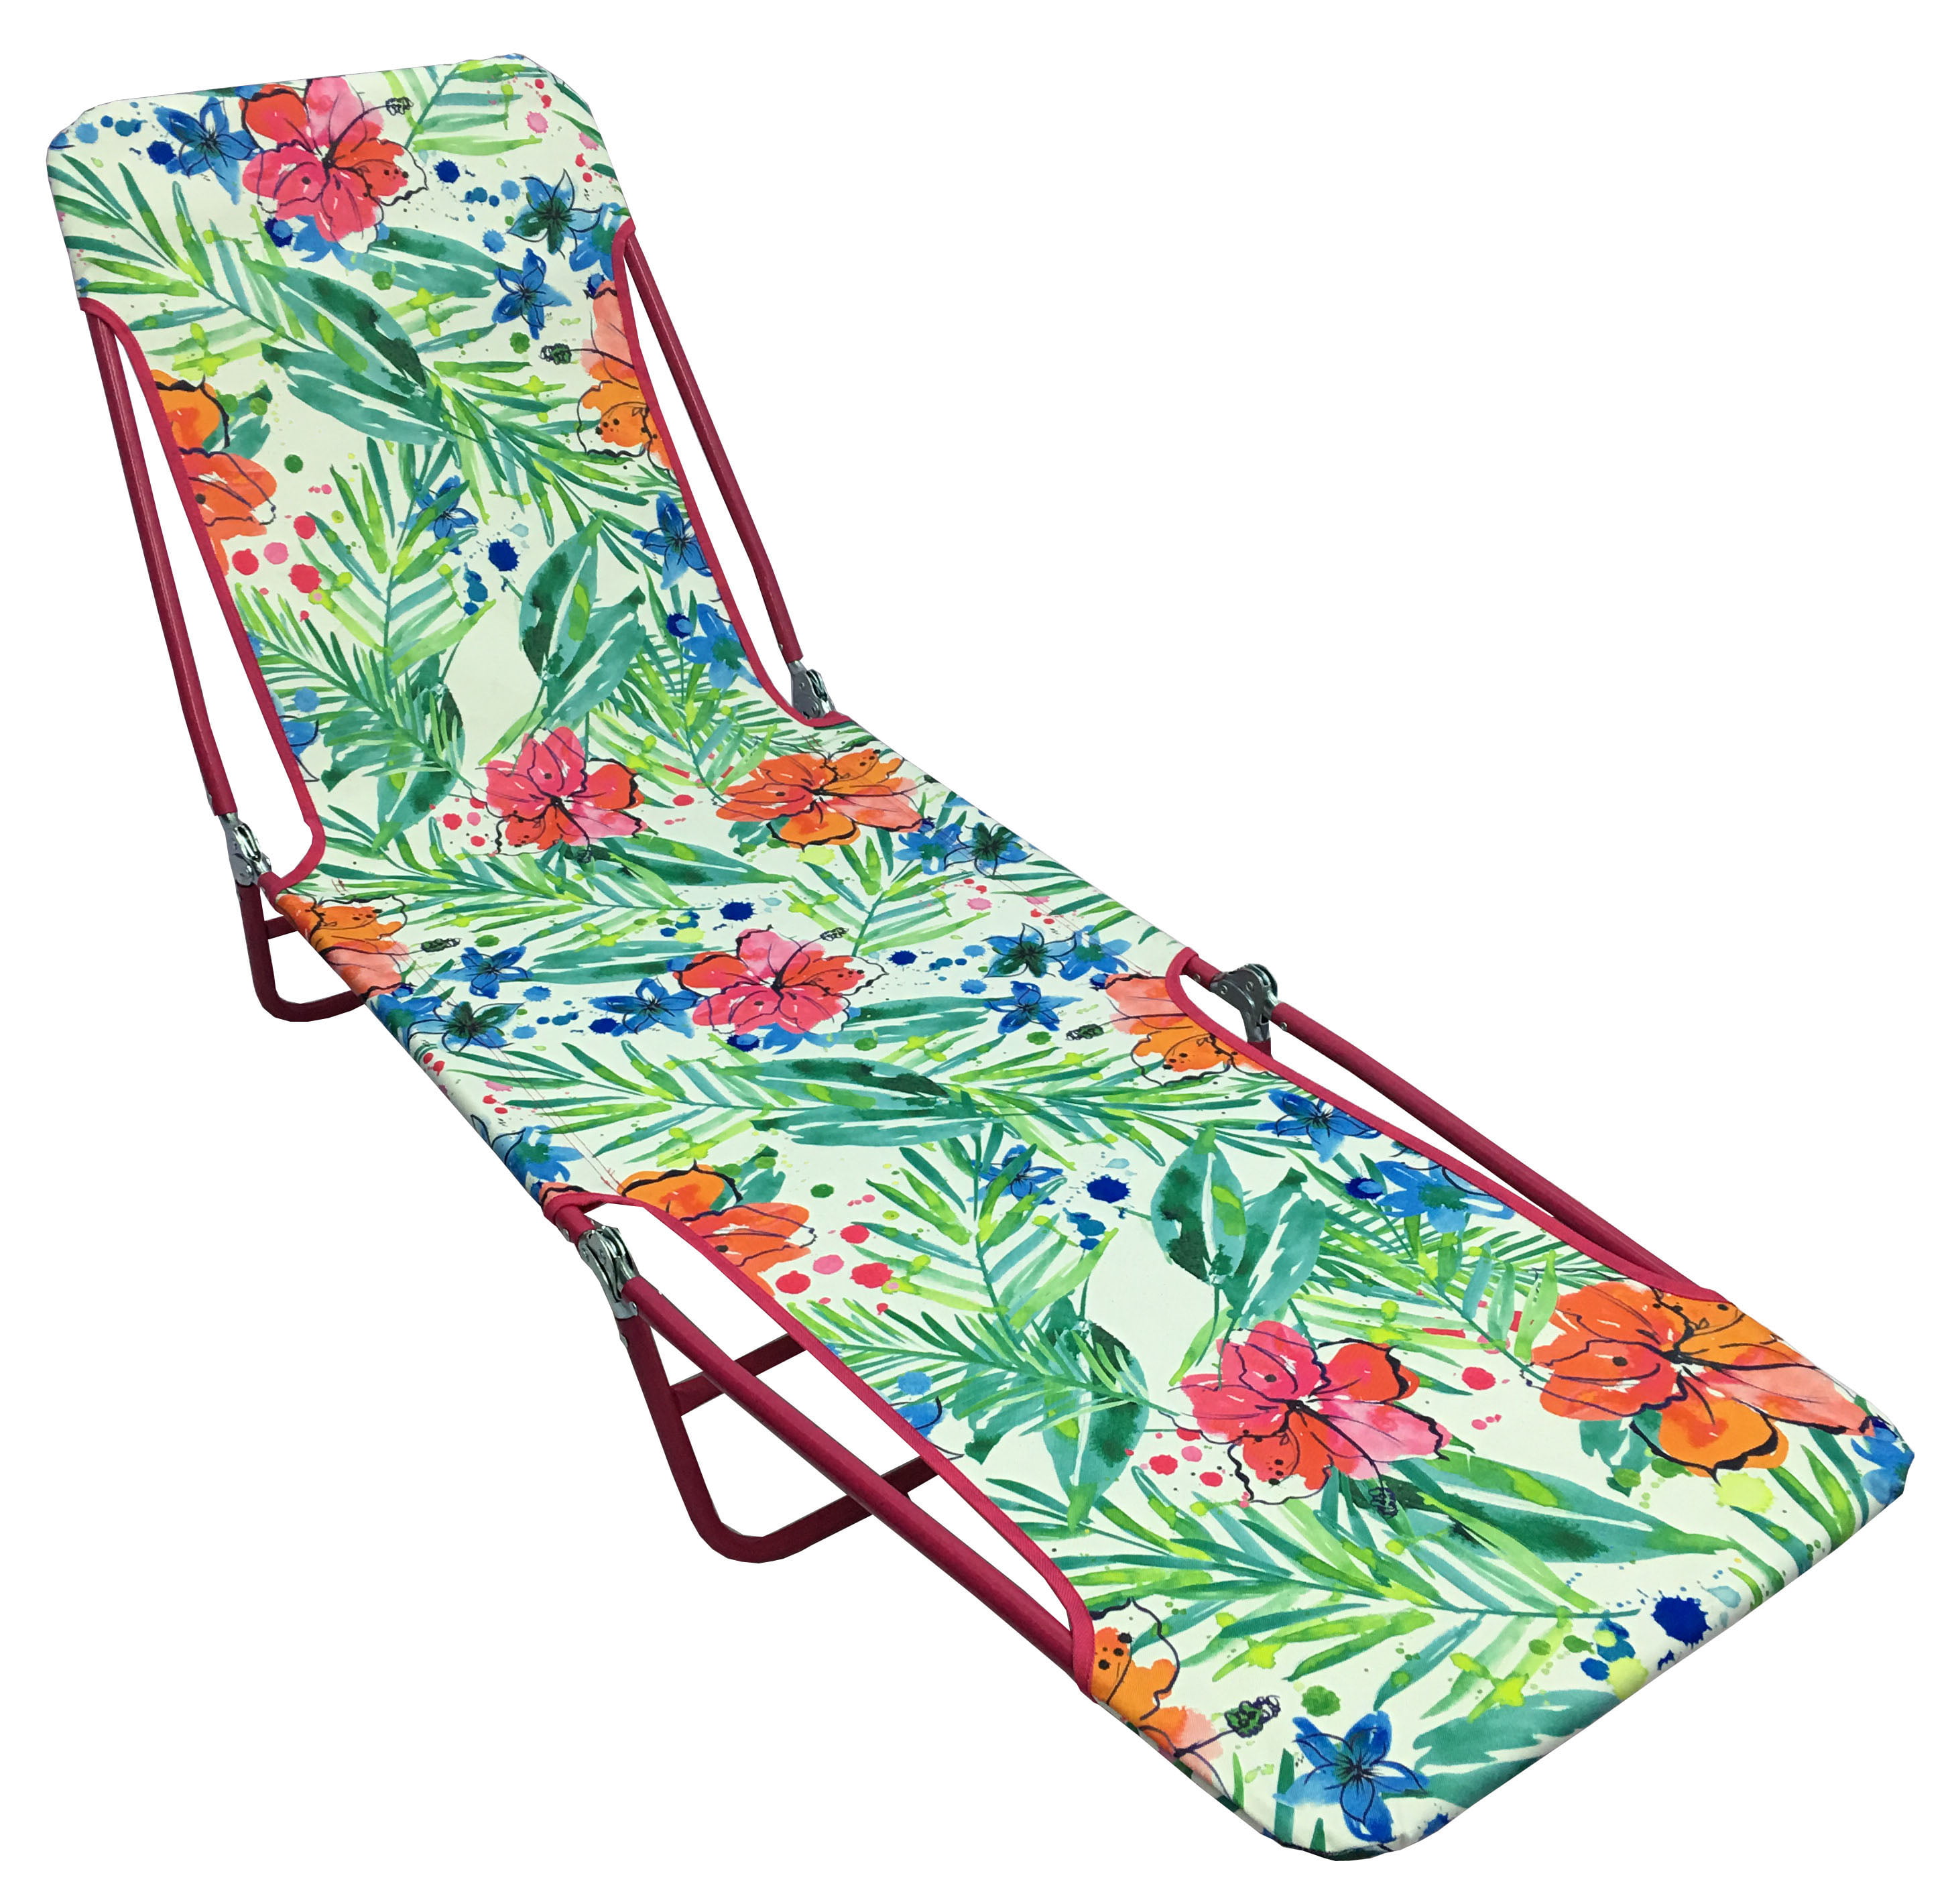 Modern Beach Chair Lounge Chairs for Simple Design